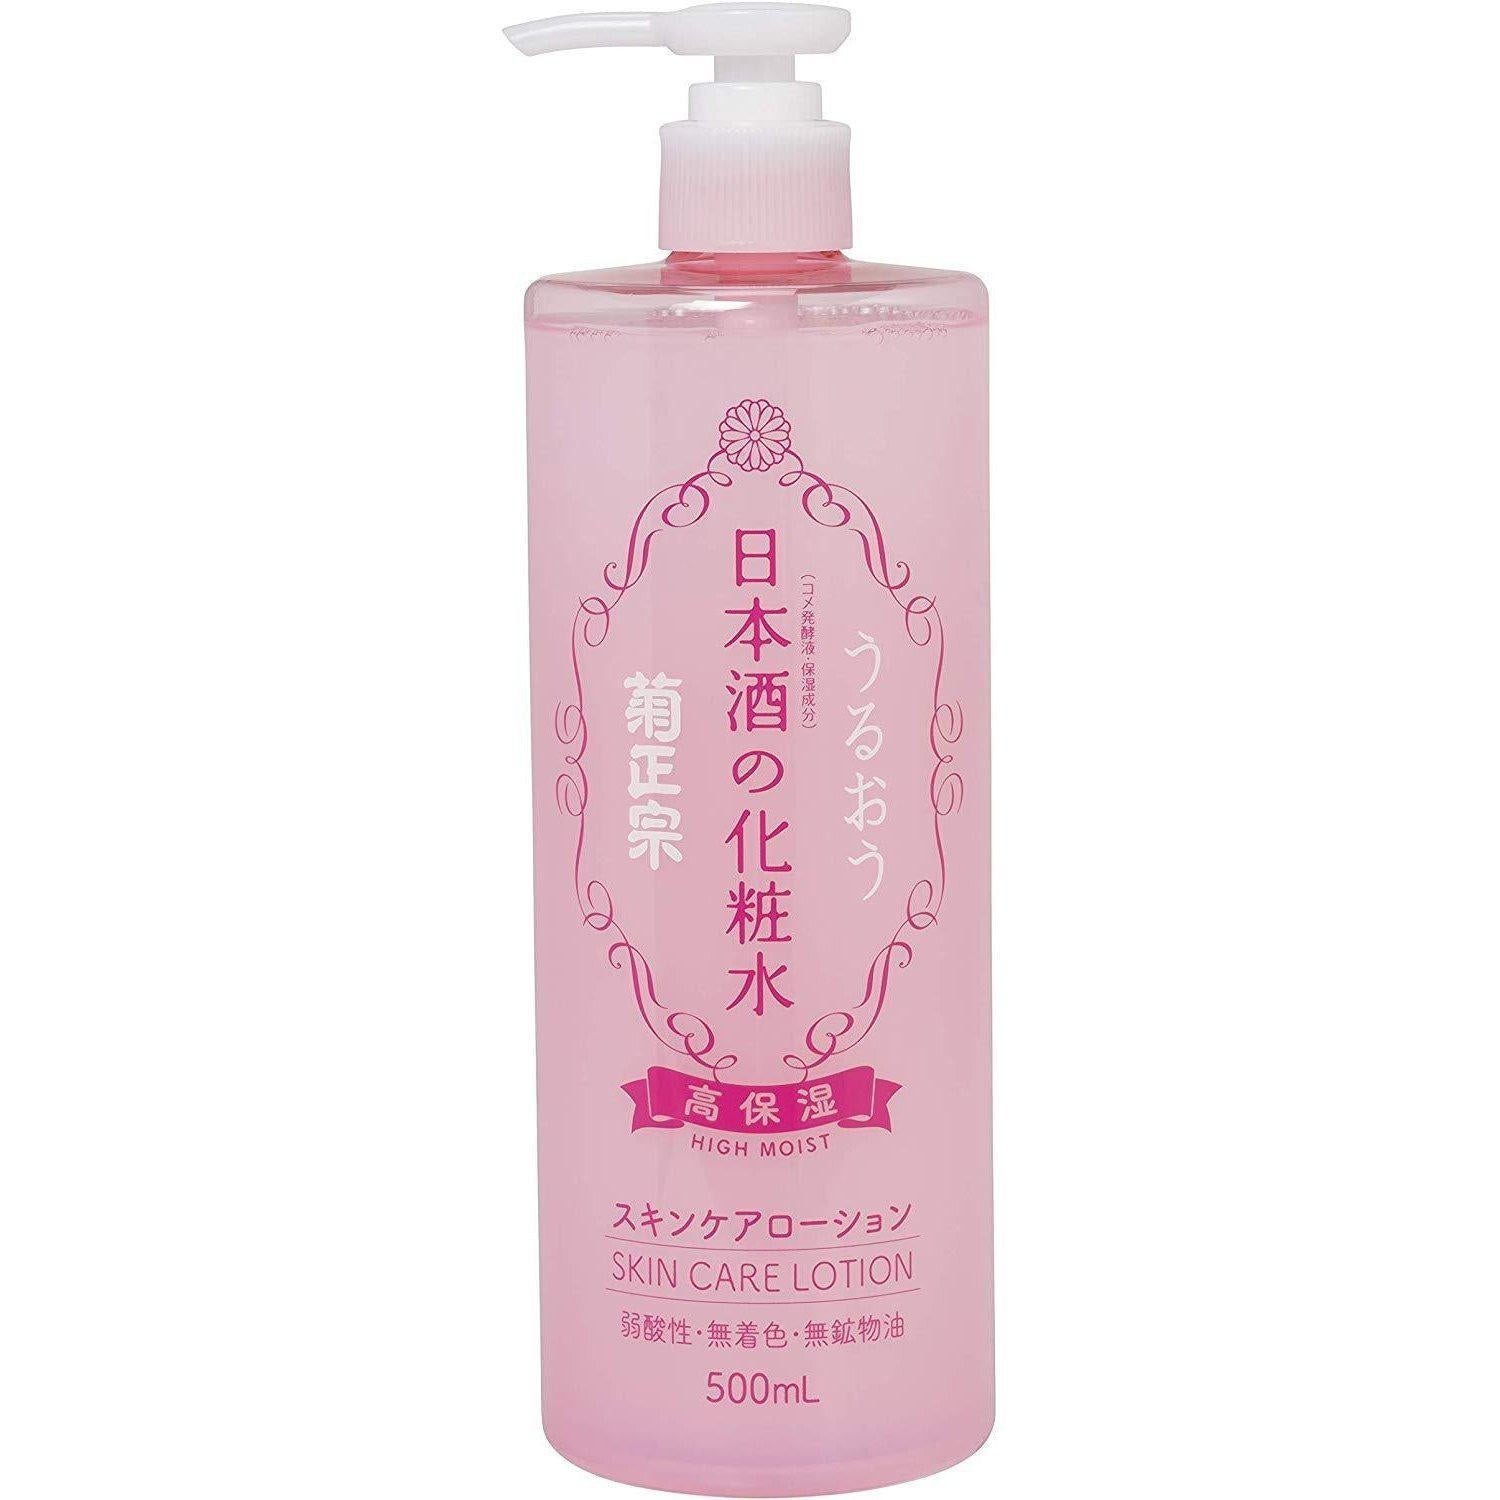 kikumasamune-japanese-sake-skin-care-lotion-high-moist